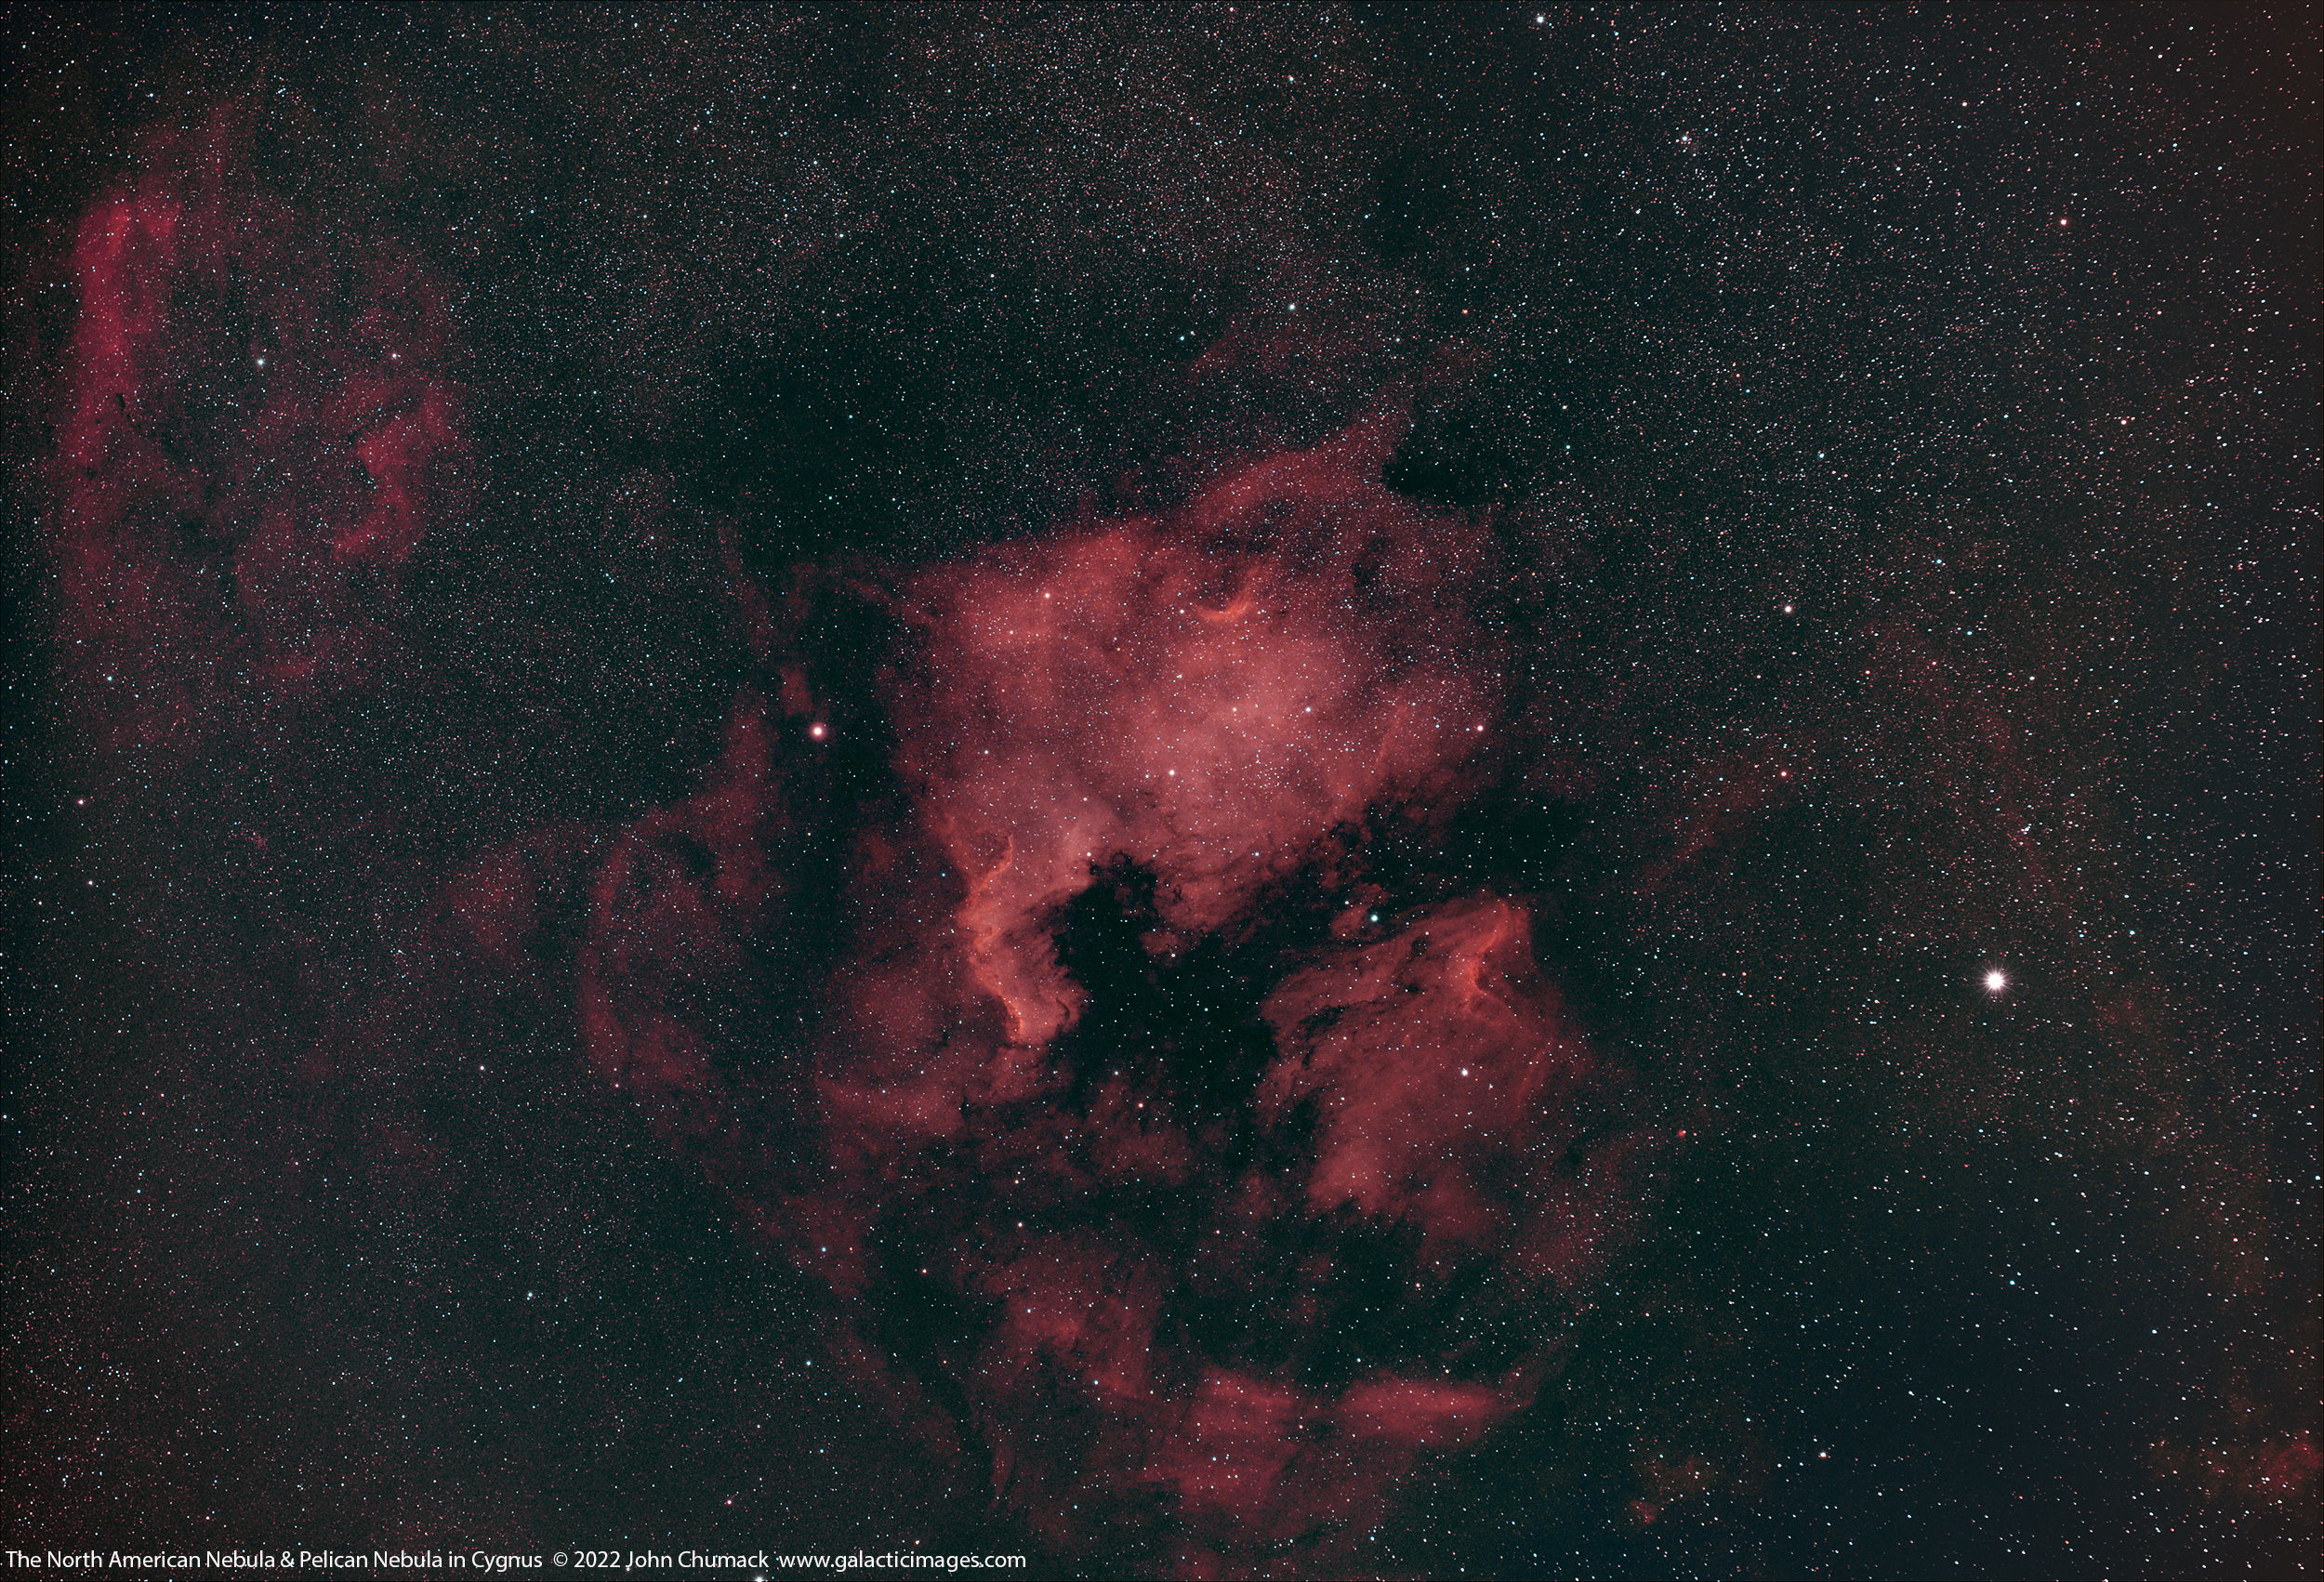 The North American Nebula & Pelican Nebulae Complex